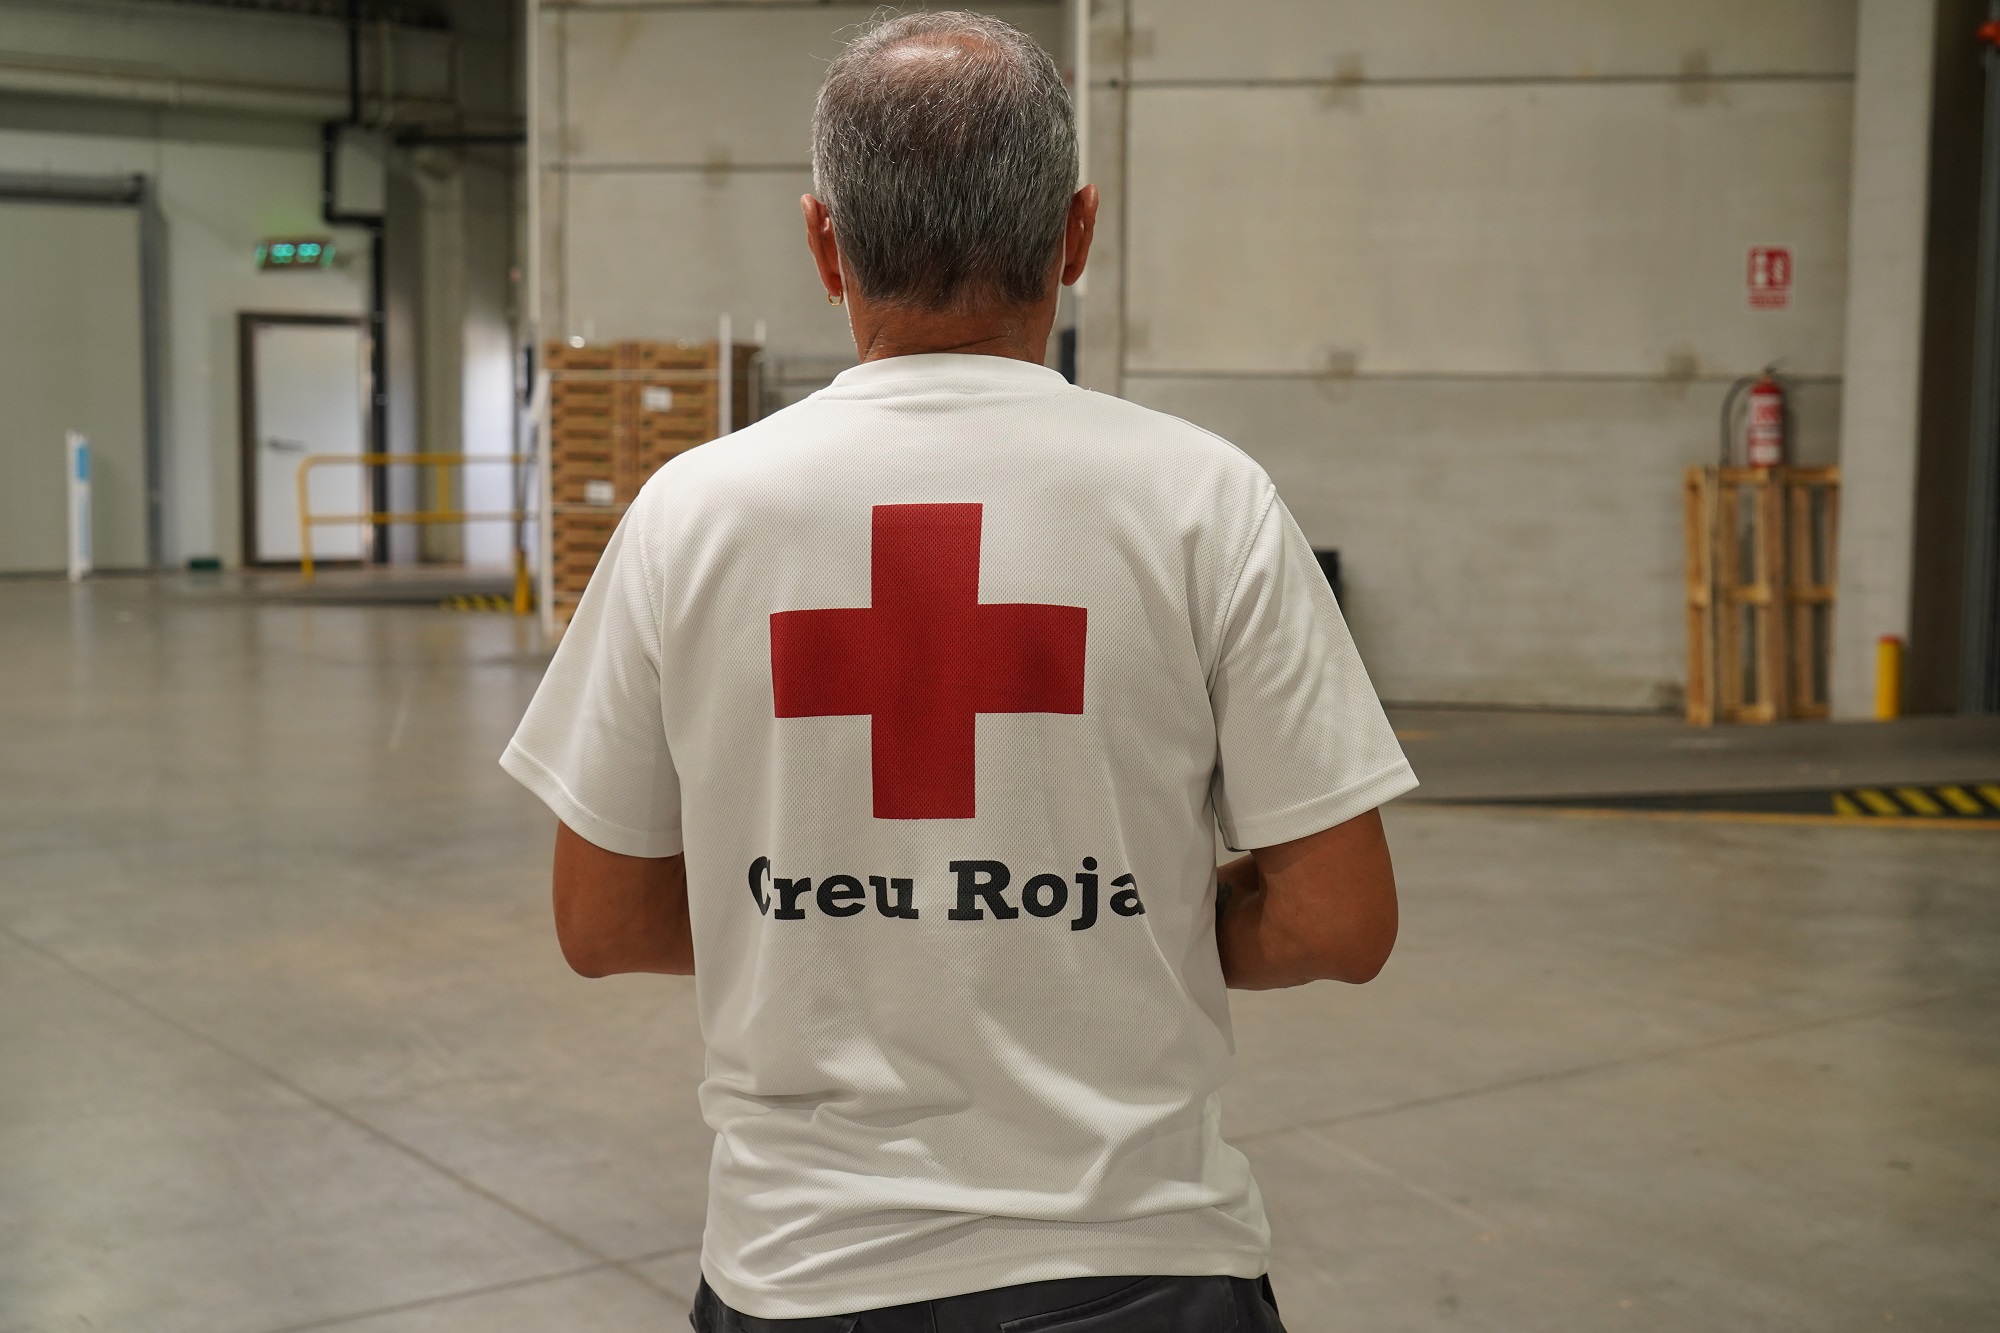 Veritas dona 1.920 quilos de harina ecológica a Cruz Roja para personas vulnerables gracias a sus clientes